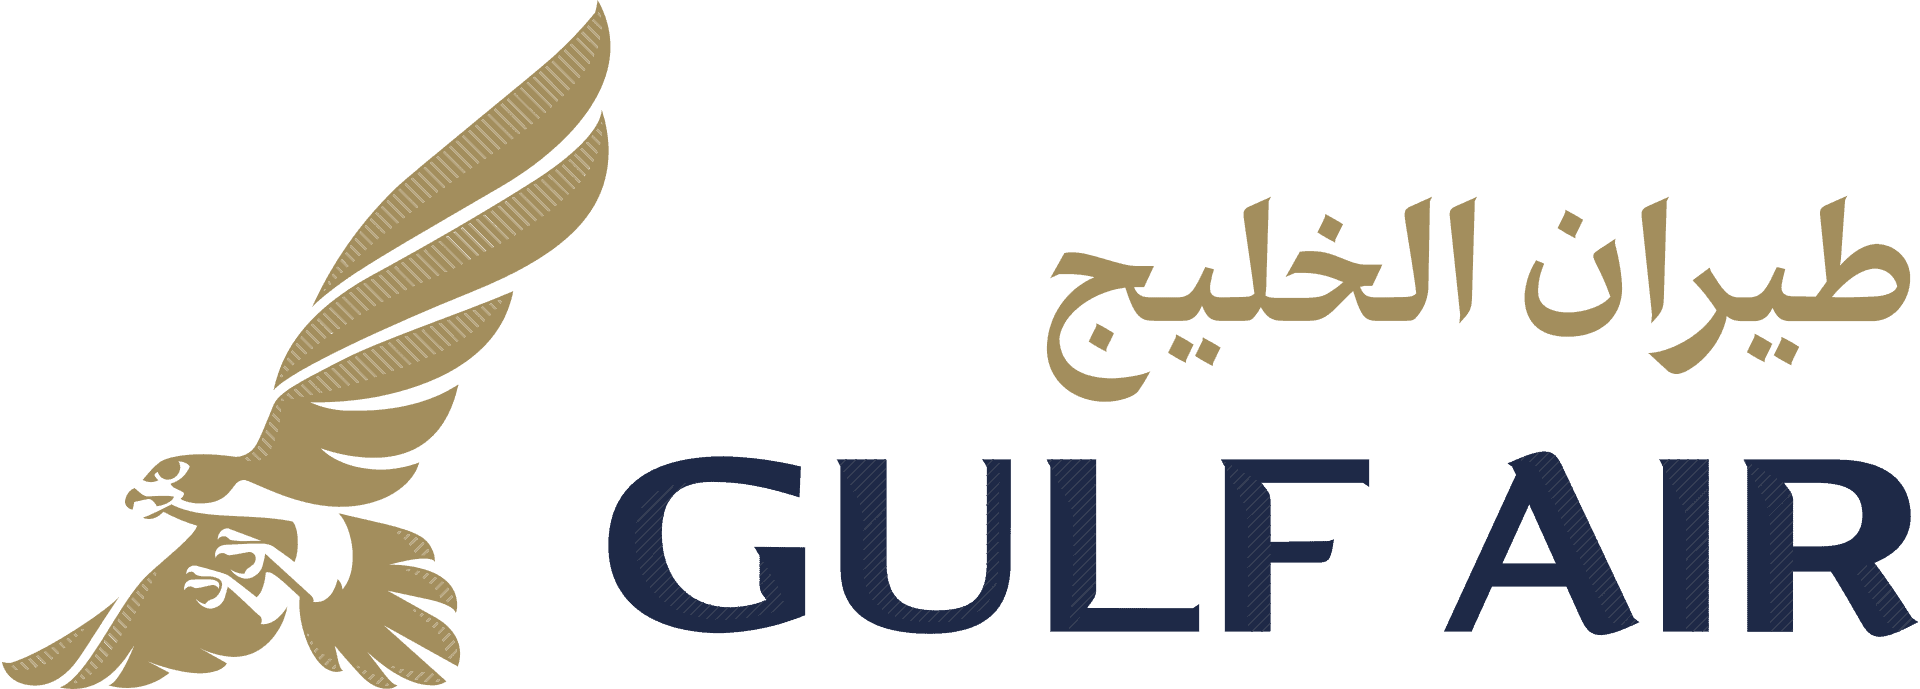 National airline of Bahrain - Gulf Air